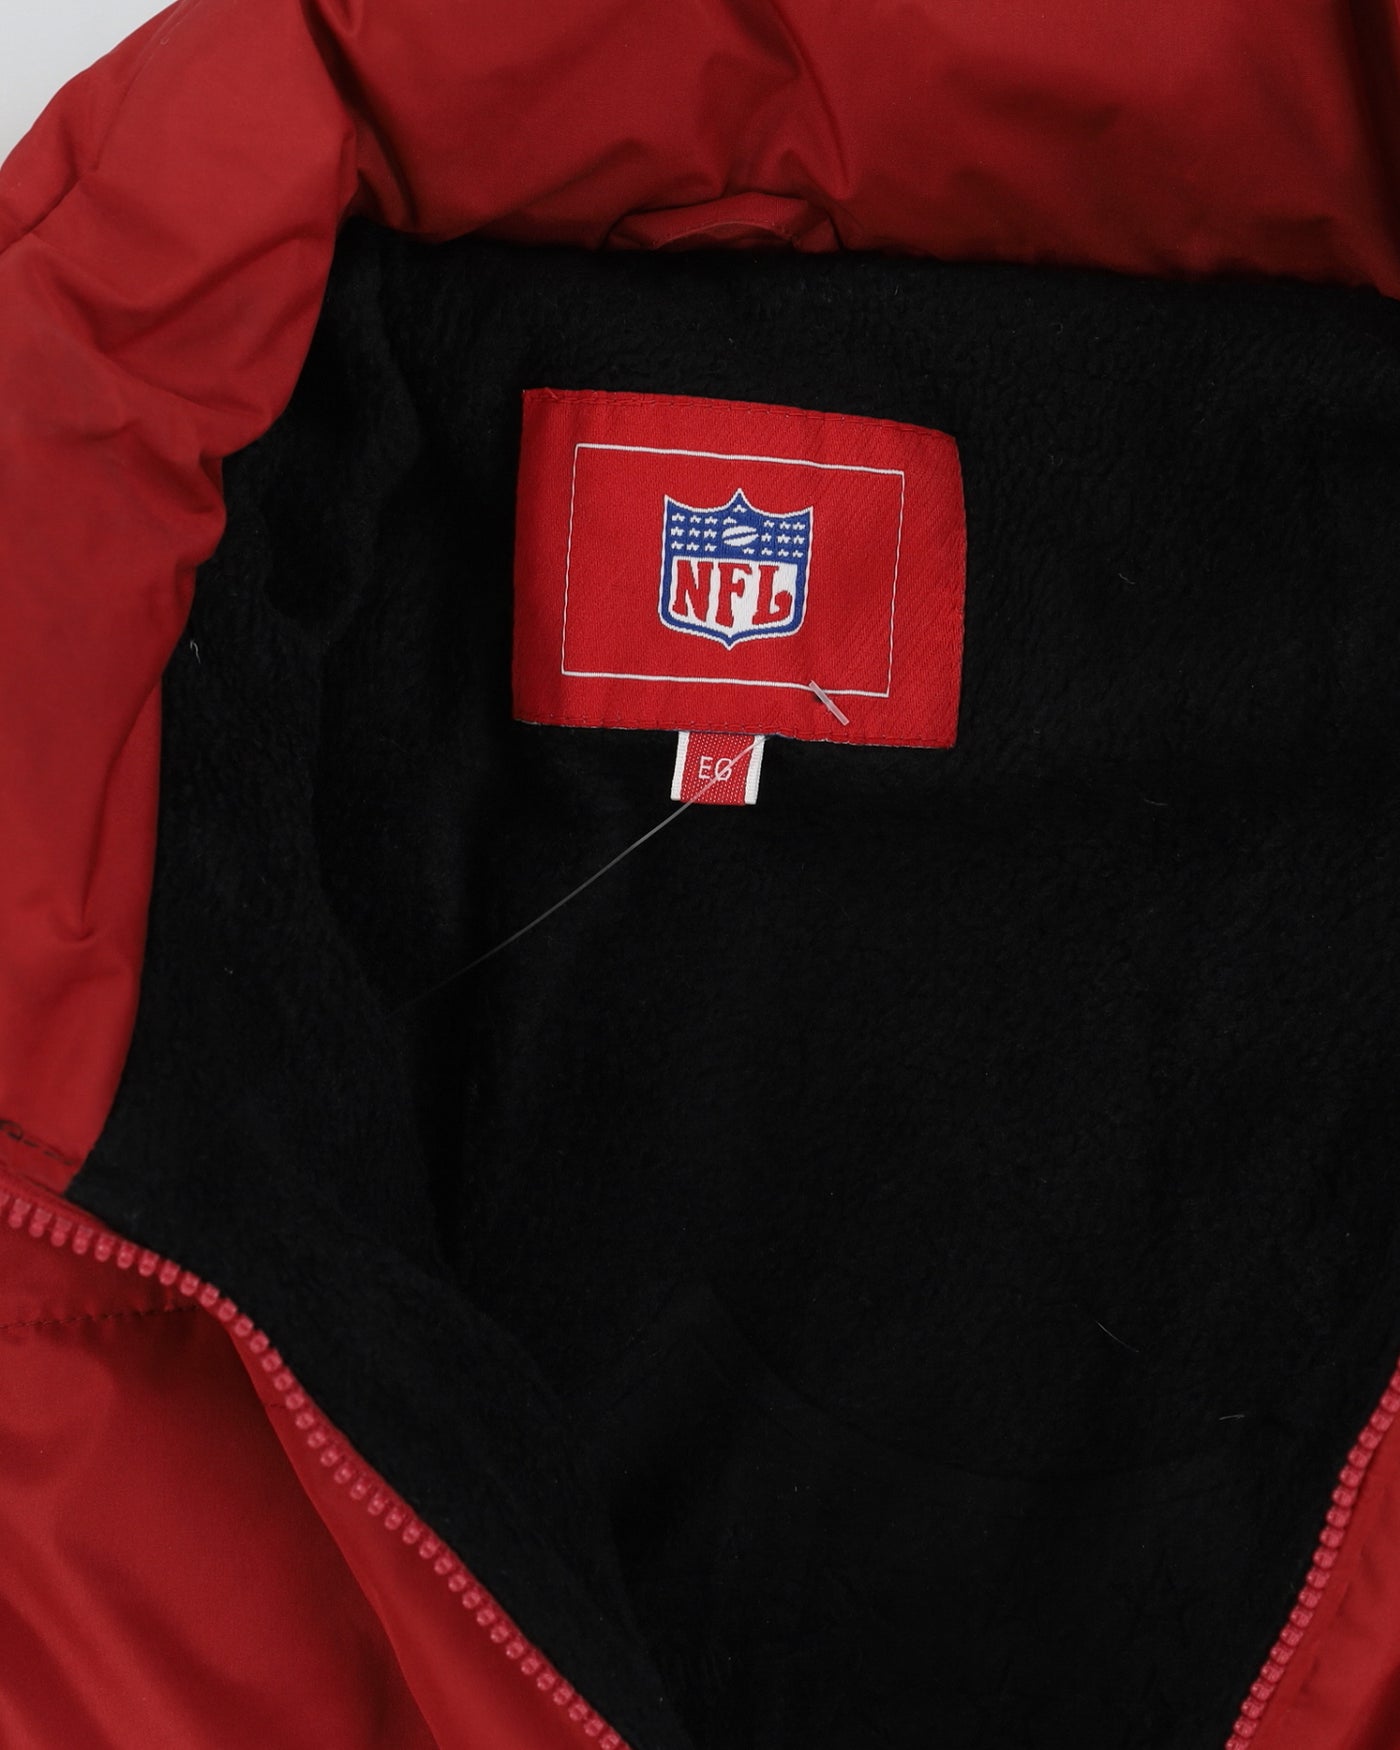 NFL San Francisco 49ERS Red Jacket - XL